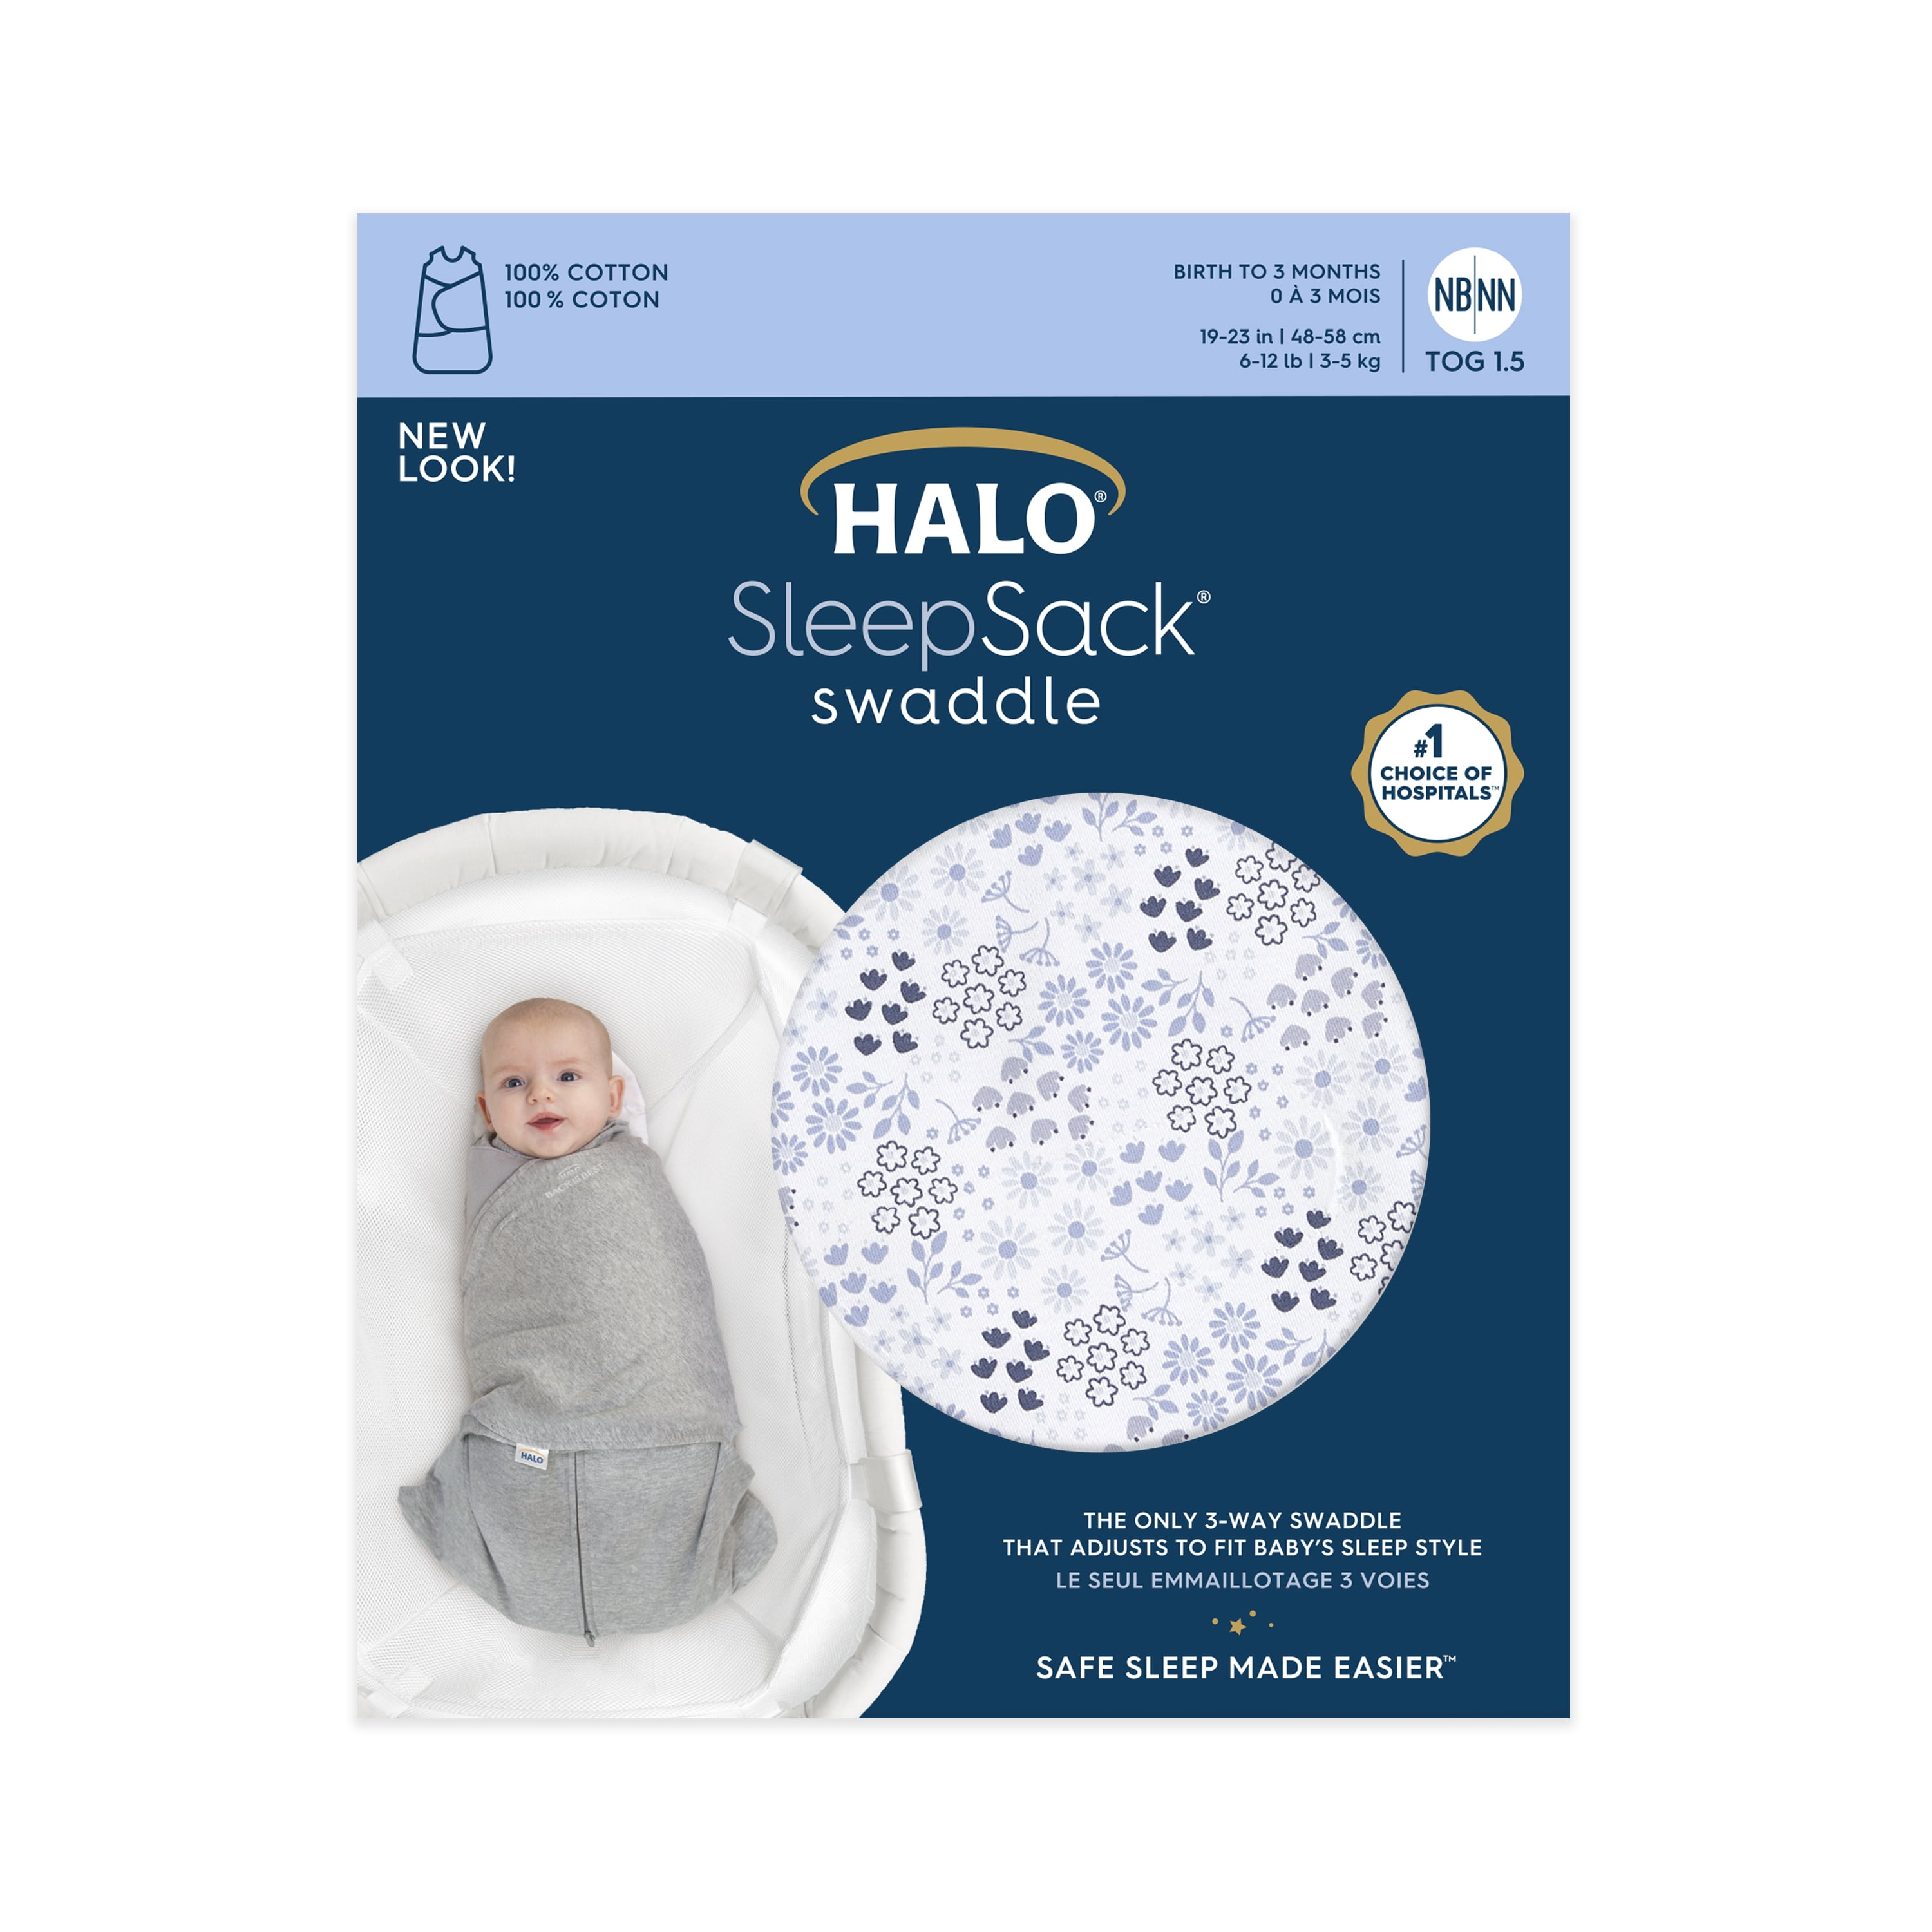 Halo Sleep Sack Swaddle Mint Green Fleece Size Preemie Birth To 5 lbs New in Pkg 